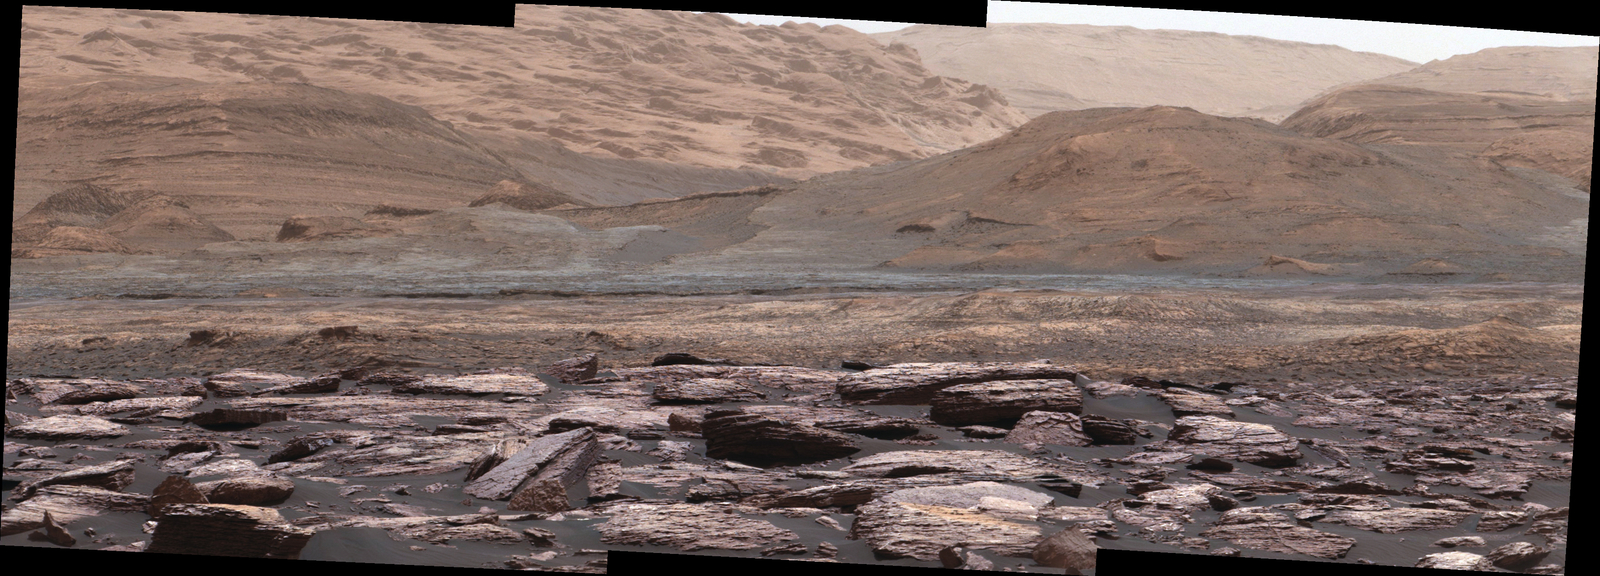 Color Variations on Mount Sharp, Mars (White Balanced)